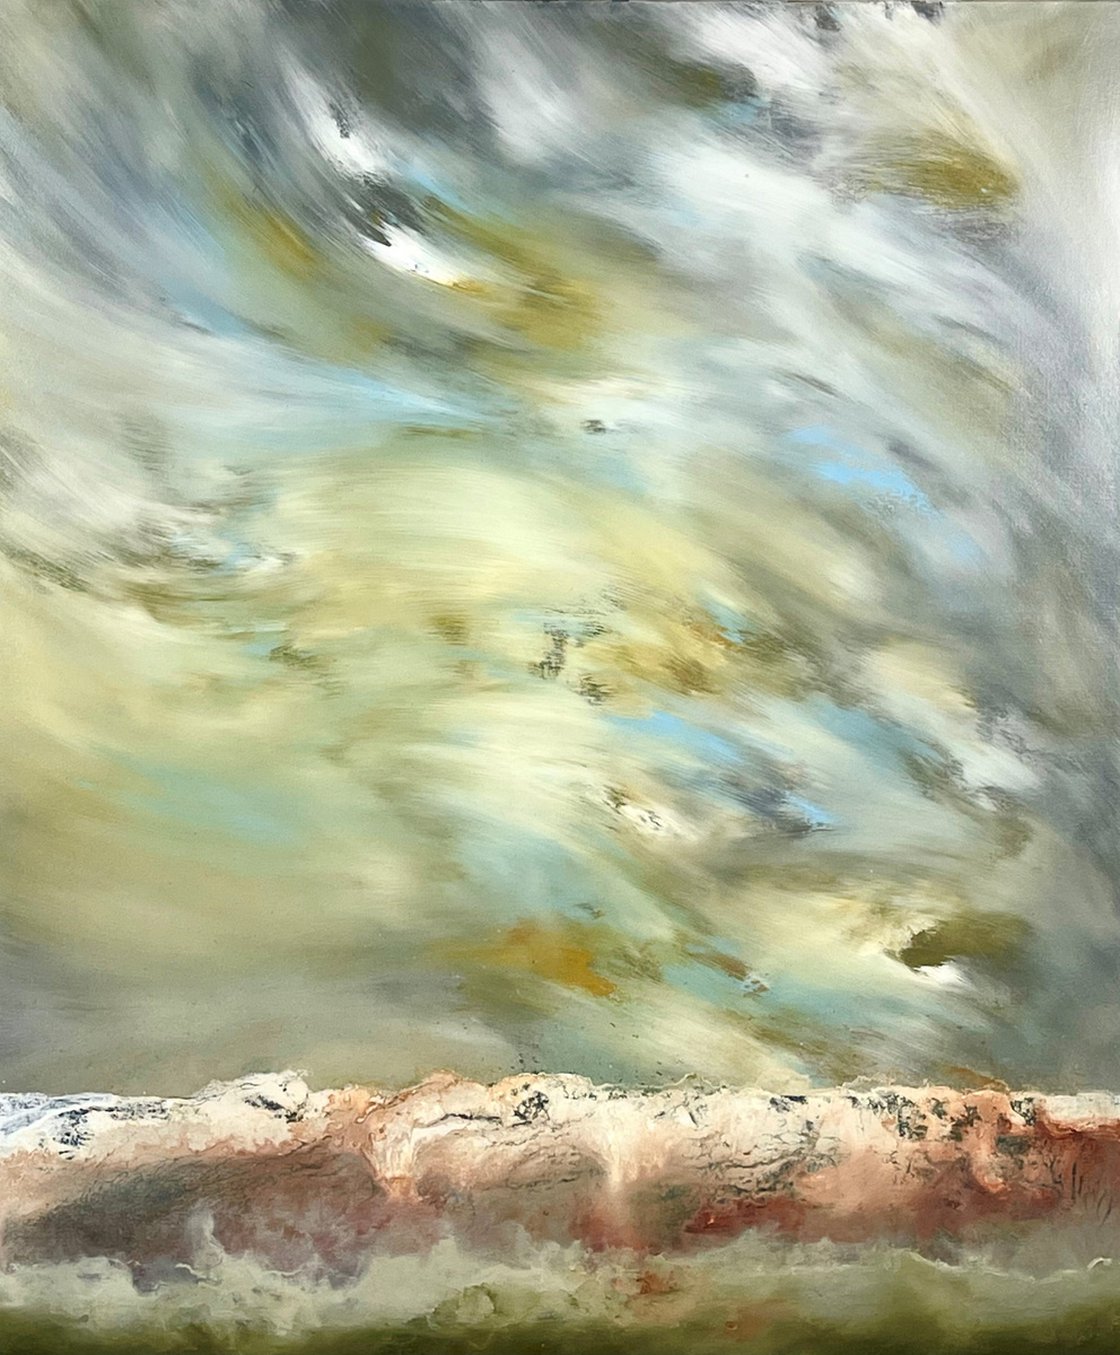 Energy - Large - 120cm x 100cm Oil painting by Jonesy | Artfinder